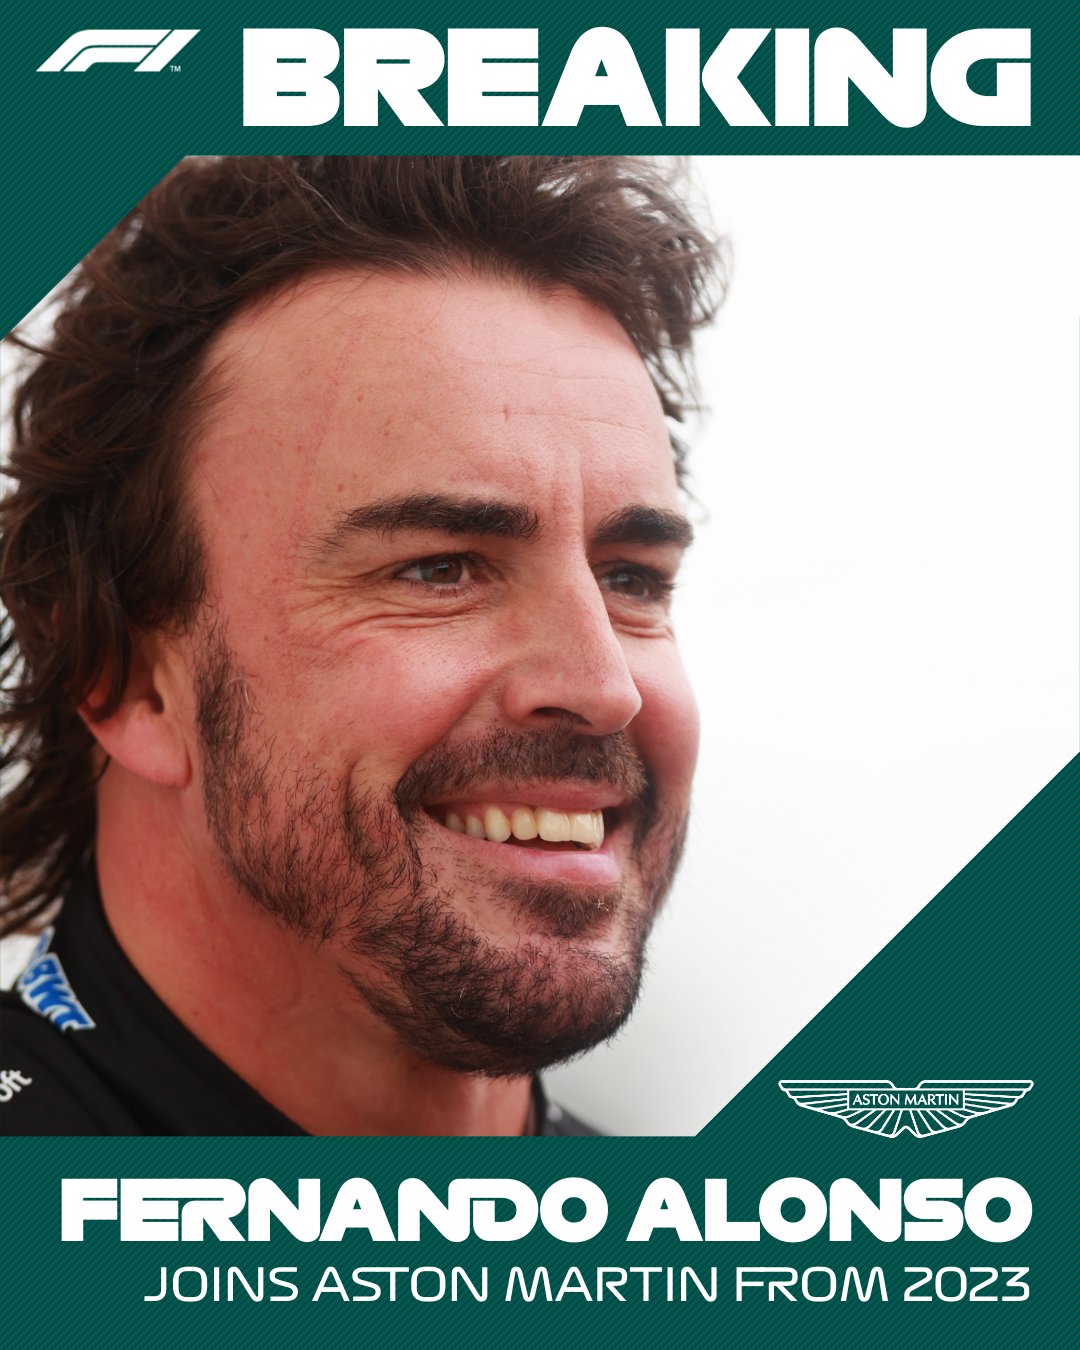 Formula 1 on Twitter: "BREAKING: Fernando Alonso will join Aston Martin  from 2023 on a multi-year contract #F1 https://t.co/dfwktaMk6F" / Twitter